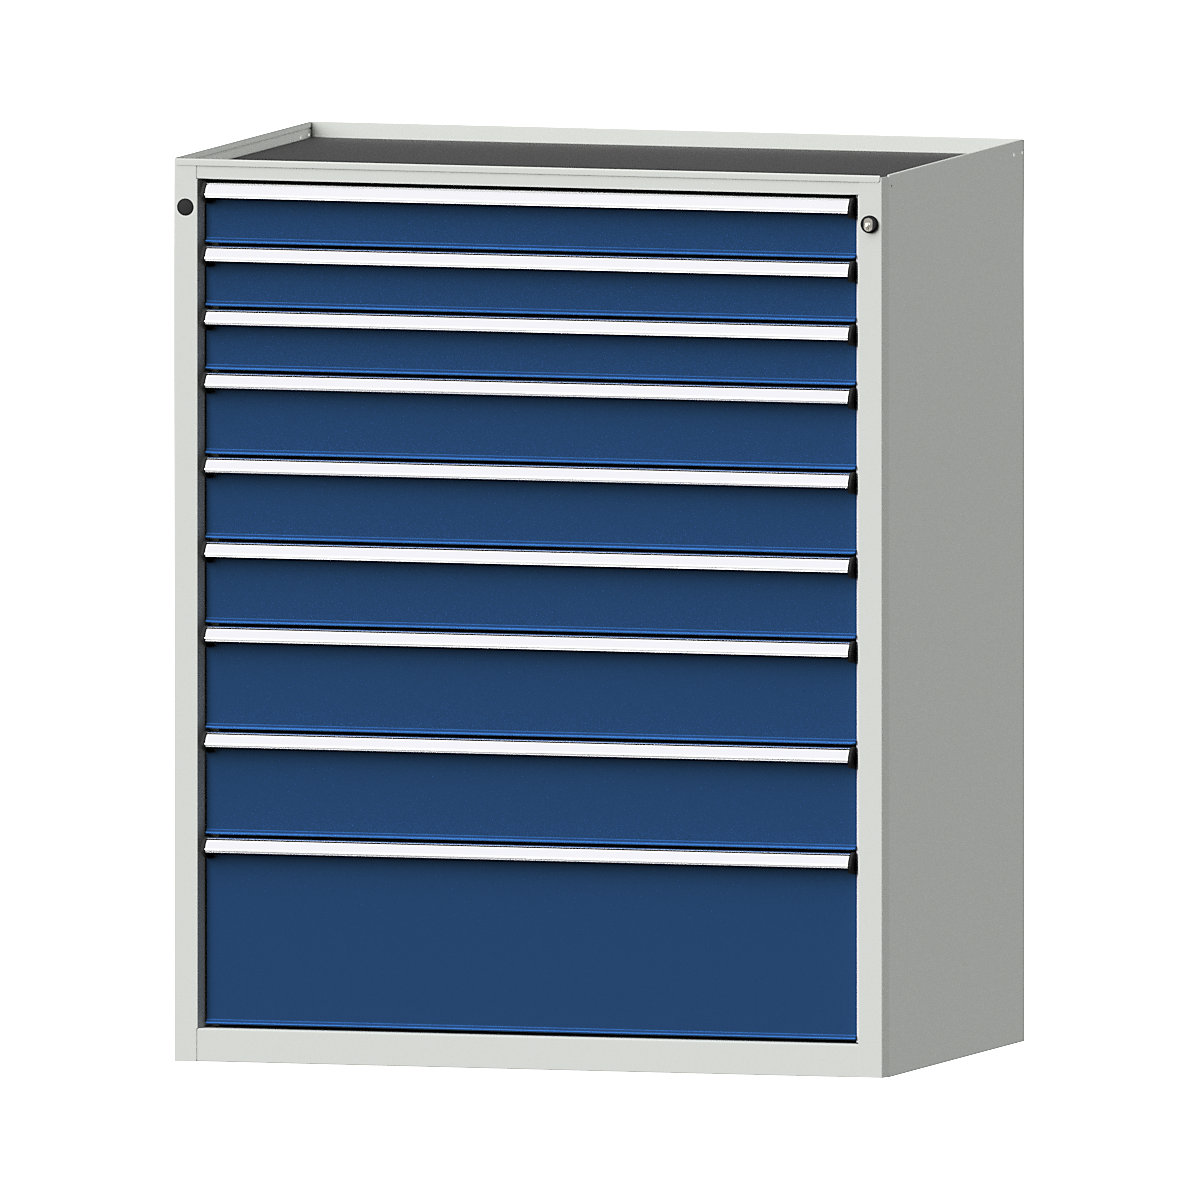 Armoire à tiroirs – ANKE, l x p 1060 x 675 mm, 9 tiroirs, hauteur 1280 mm, façade bleu gentiane-6